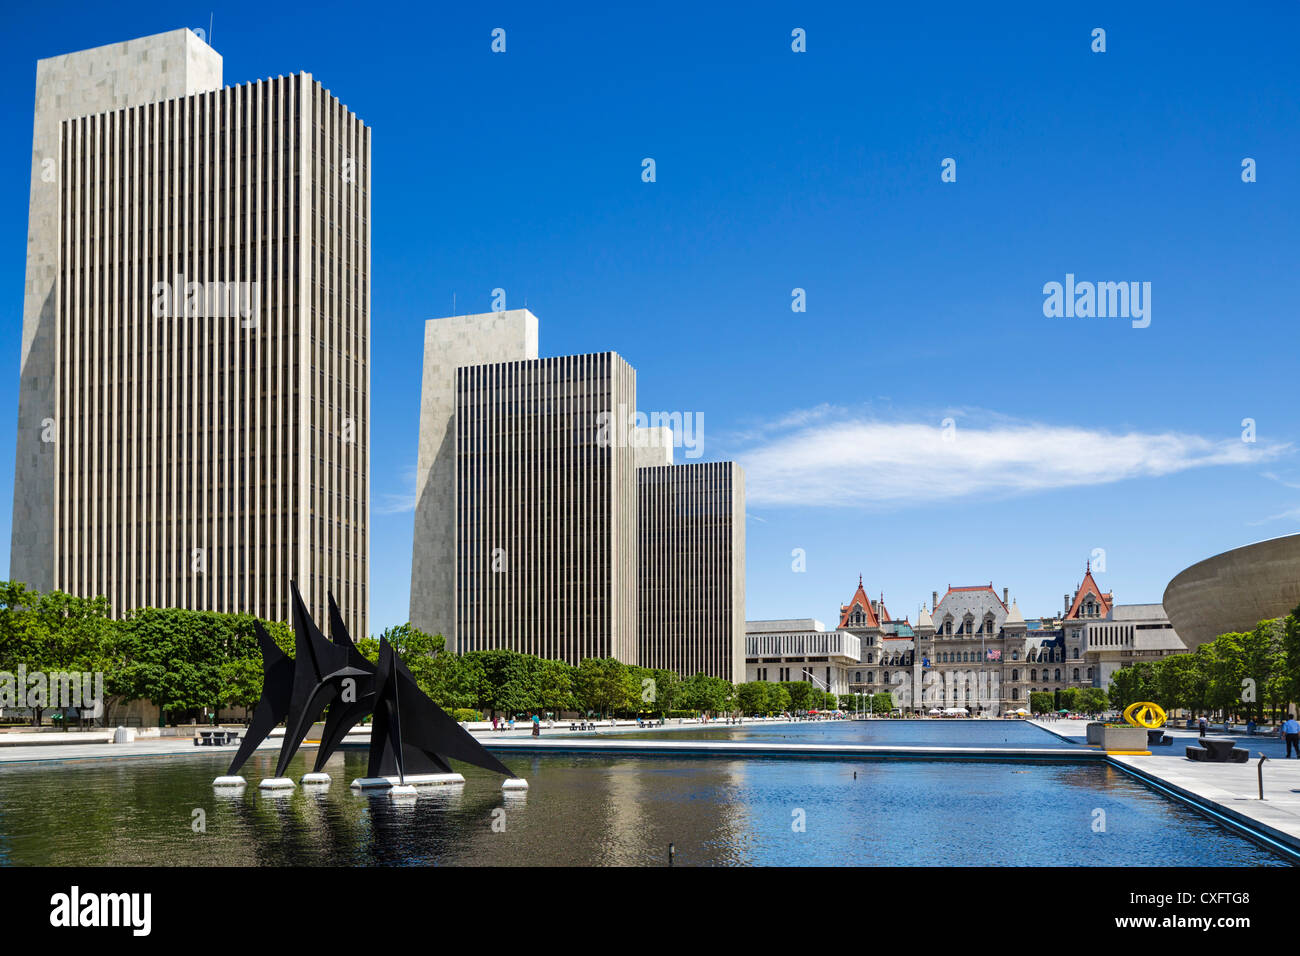 Nelson A Rockefeller Empire State Plaza mit Blick auf State Capitol mit "The Egg" zu Recht, Albany, New York State, USA Stockfoto